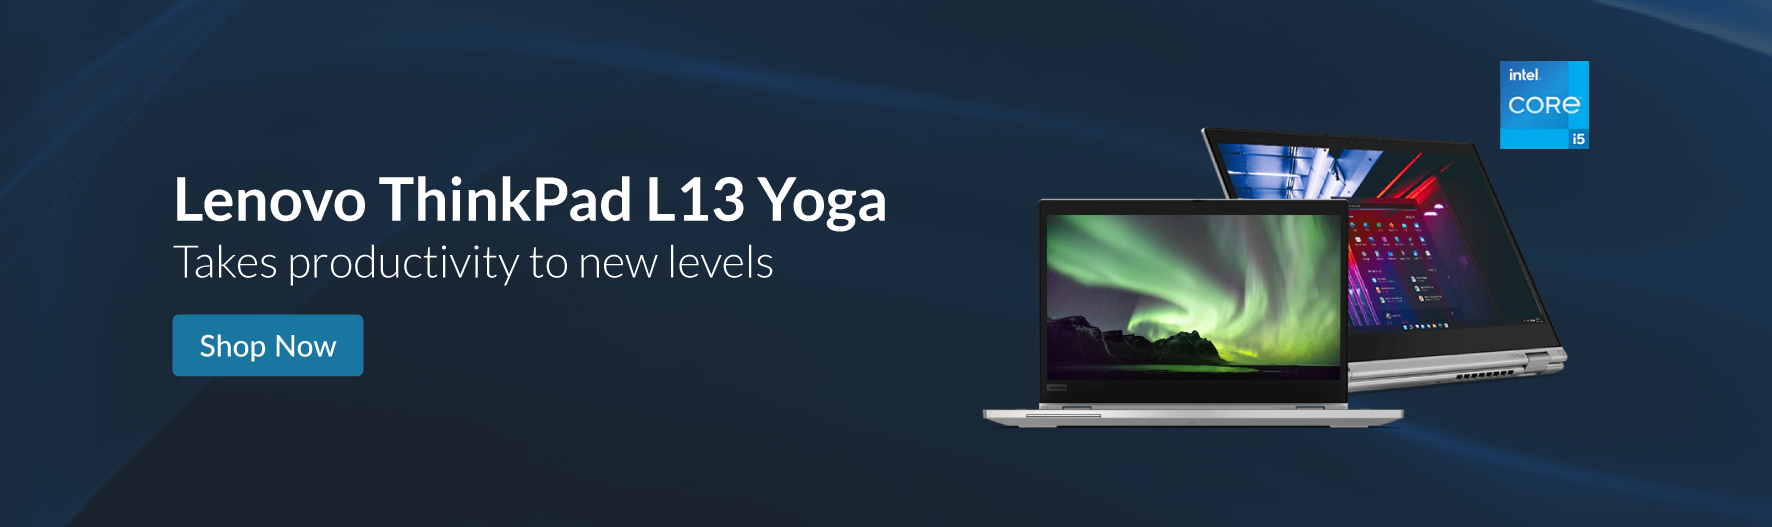 Lenovo L13 Yoga